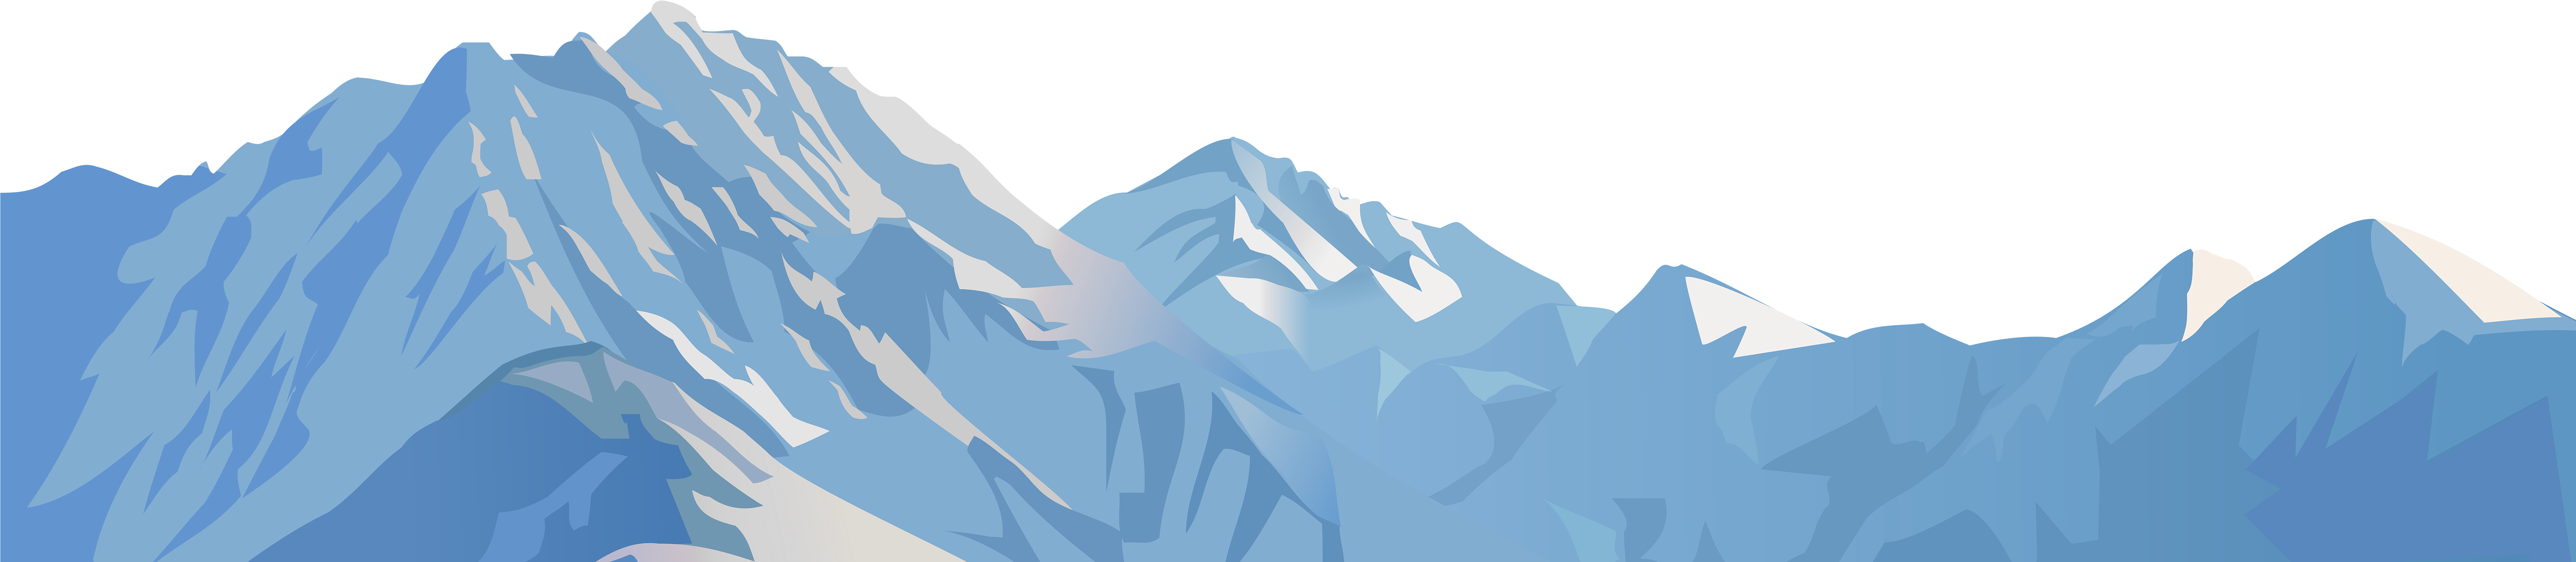 Snowy Mountain Transparent Clip Art Image - Snowy Mountain Transparent (8000x1820)